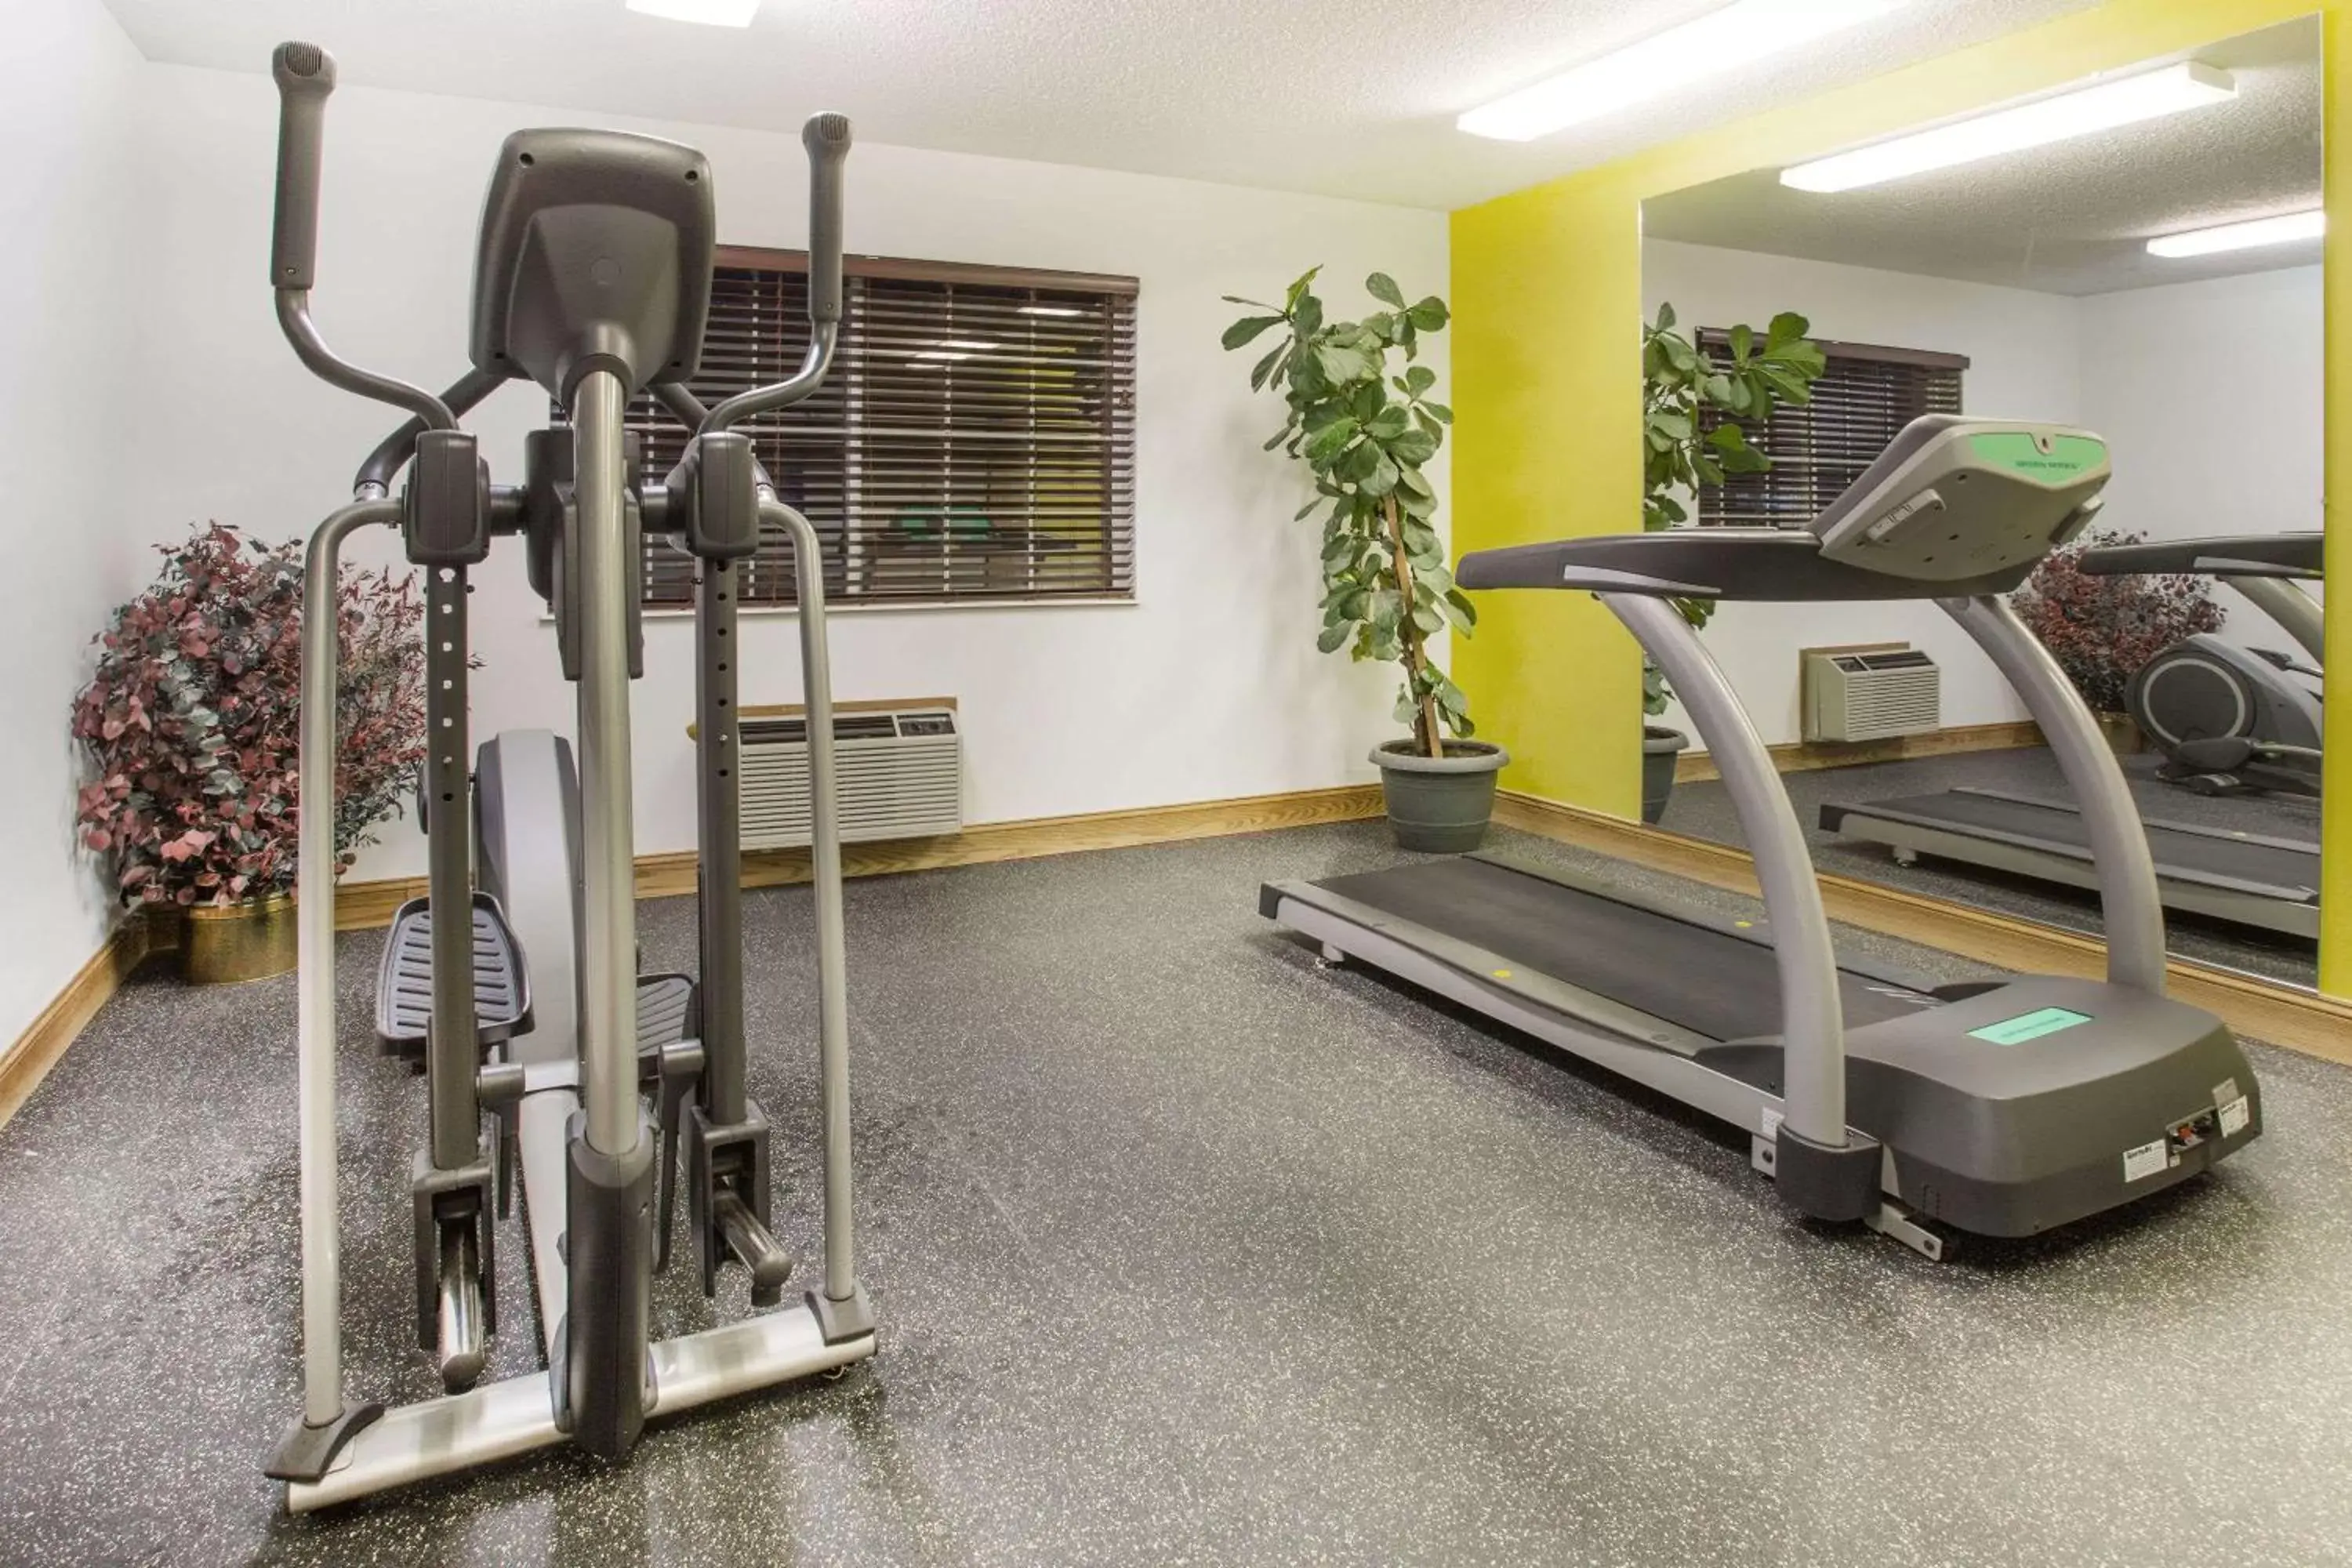 Fitness centre/facilities, Fitness Center/Facilities in Days Inn by Wyndham Lexington NE